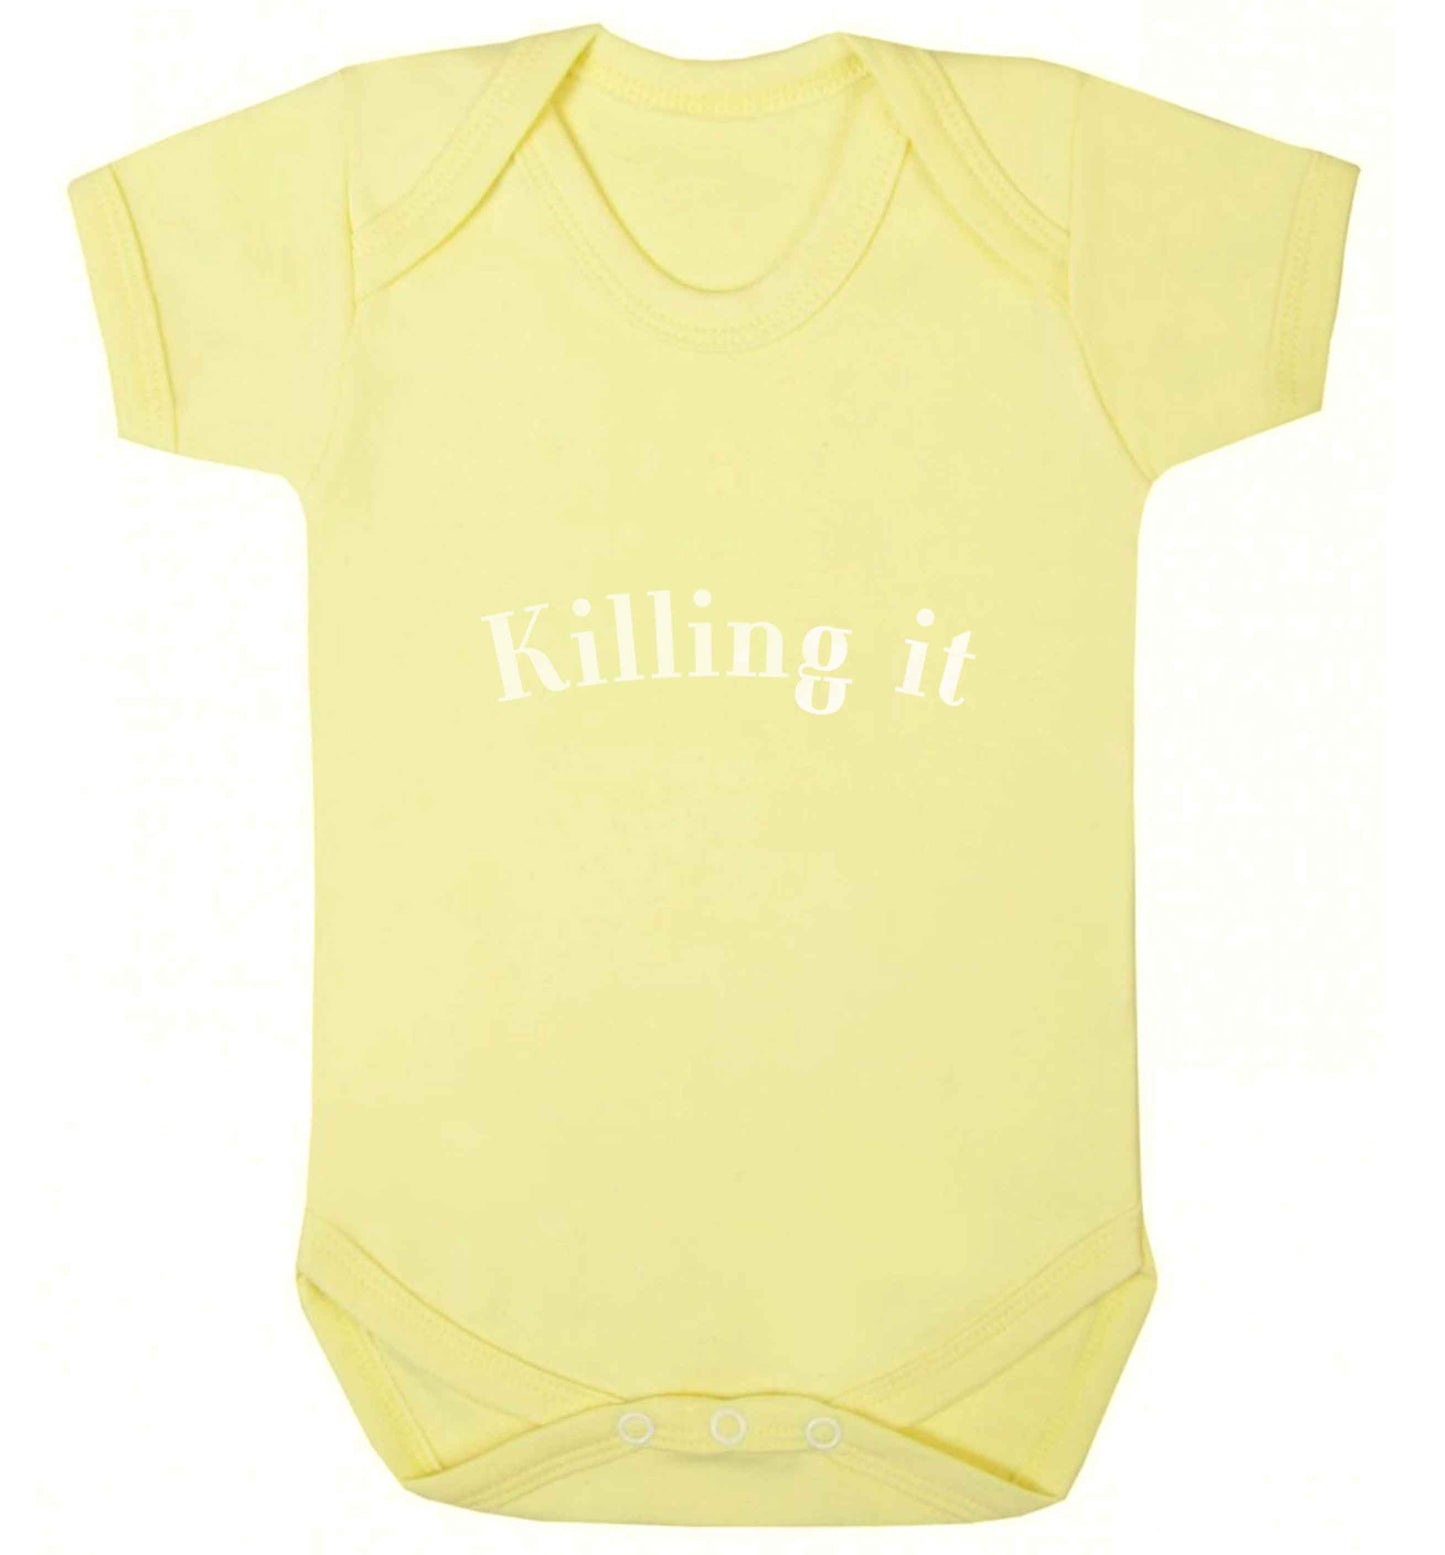 Killing it baby vest pale yellow 18-24 months